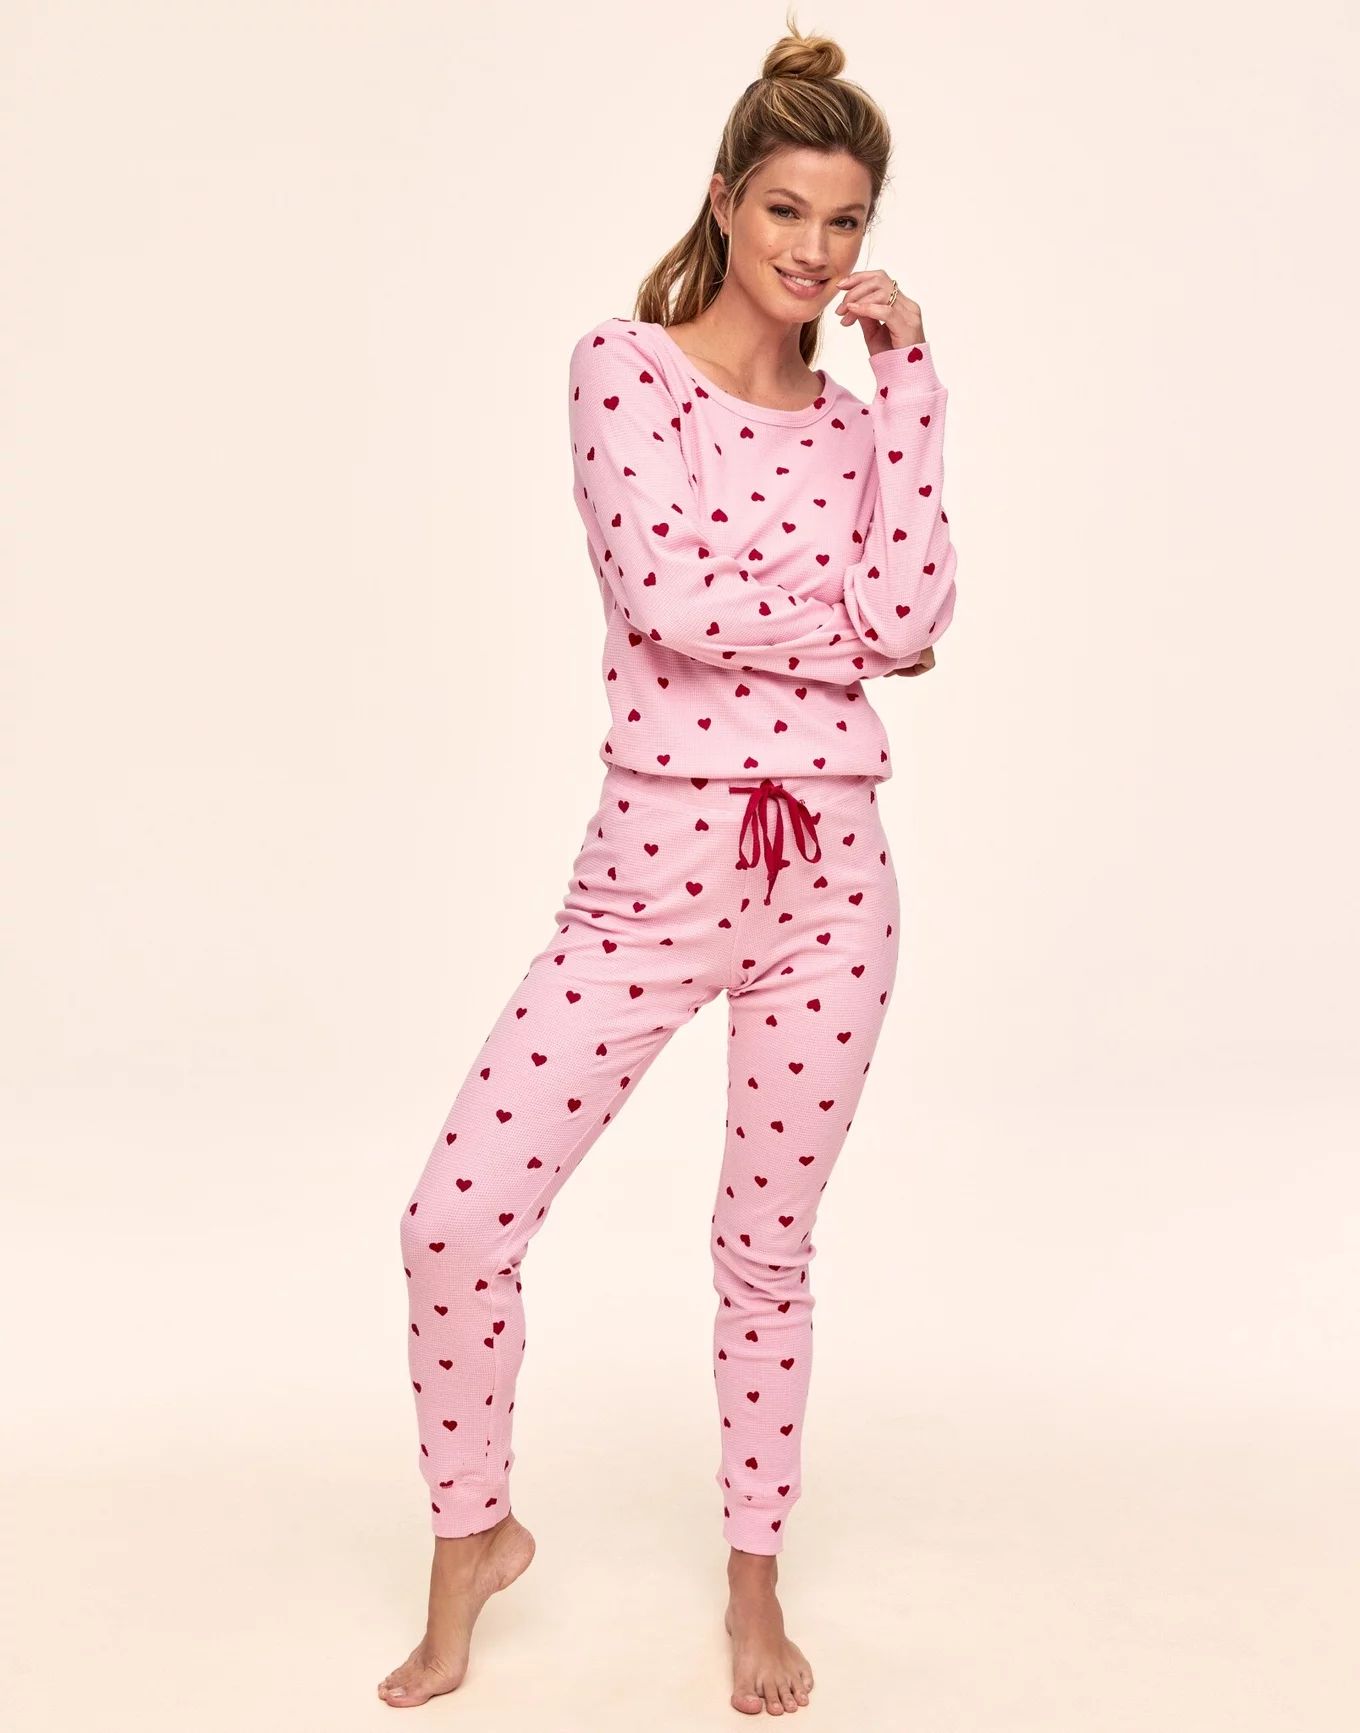 Muriel Heart Pink Cotton Pajamas For Women Set | Adore Me | Adore Me